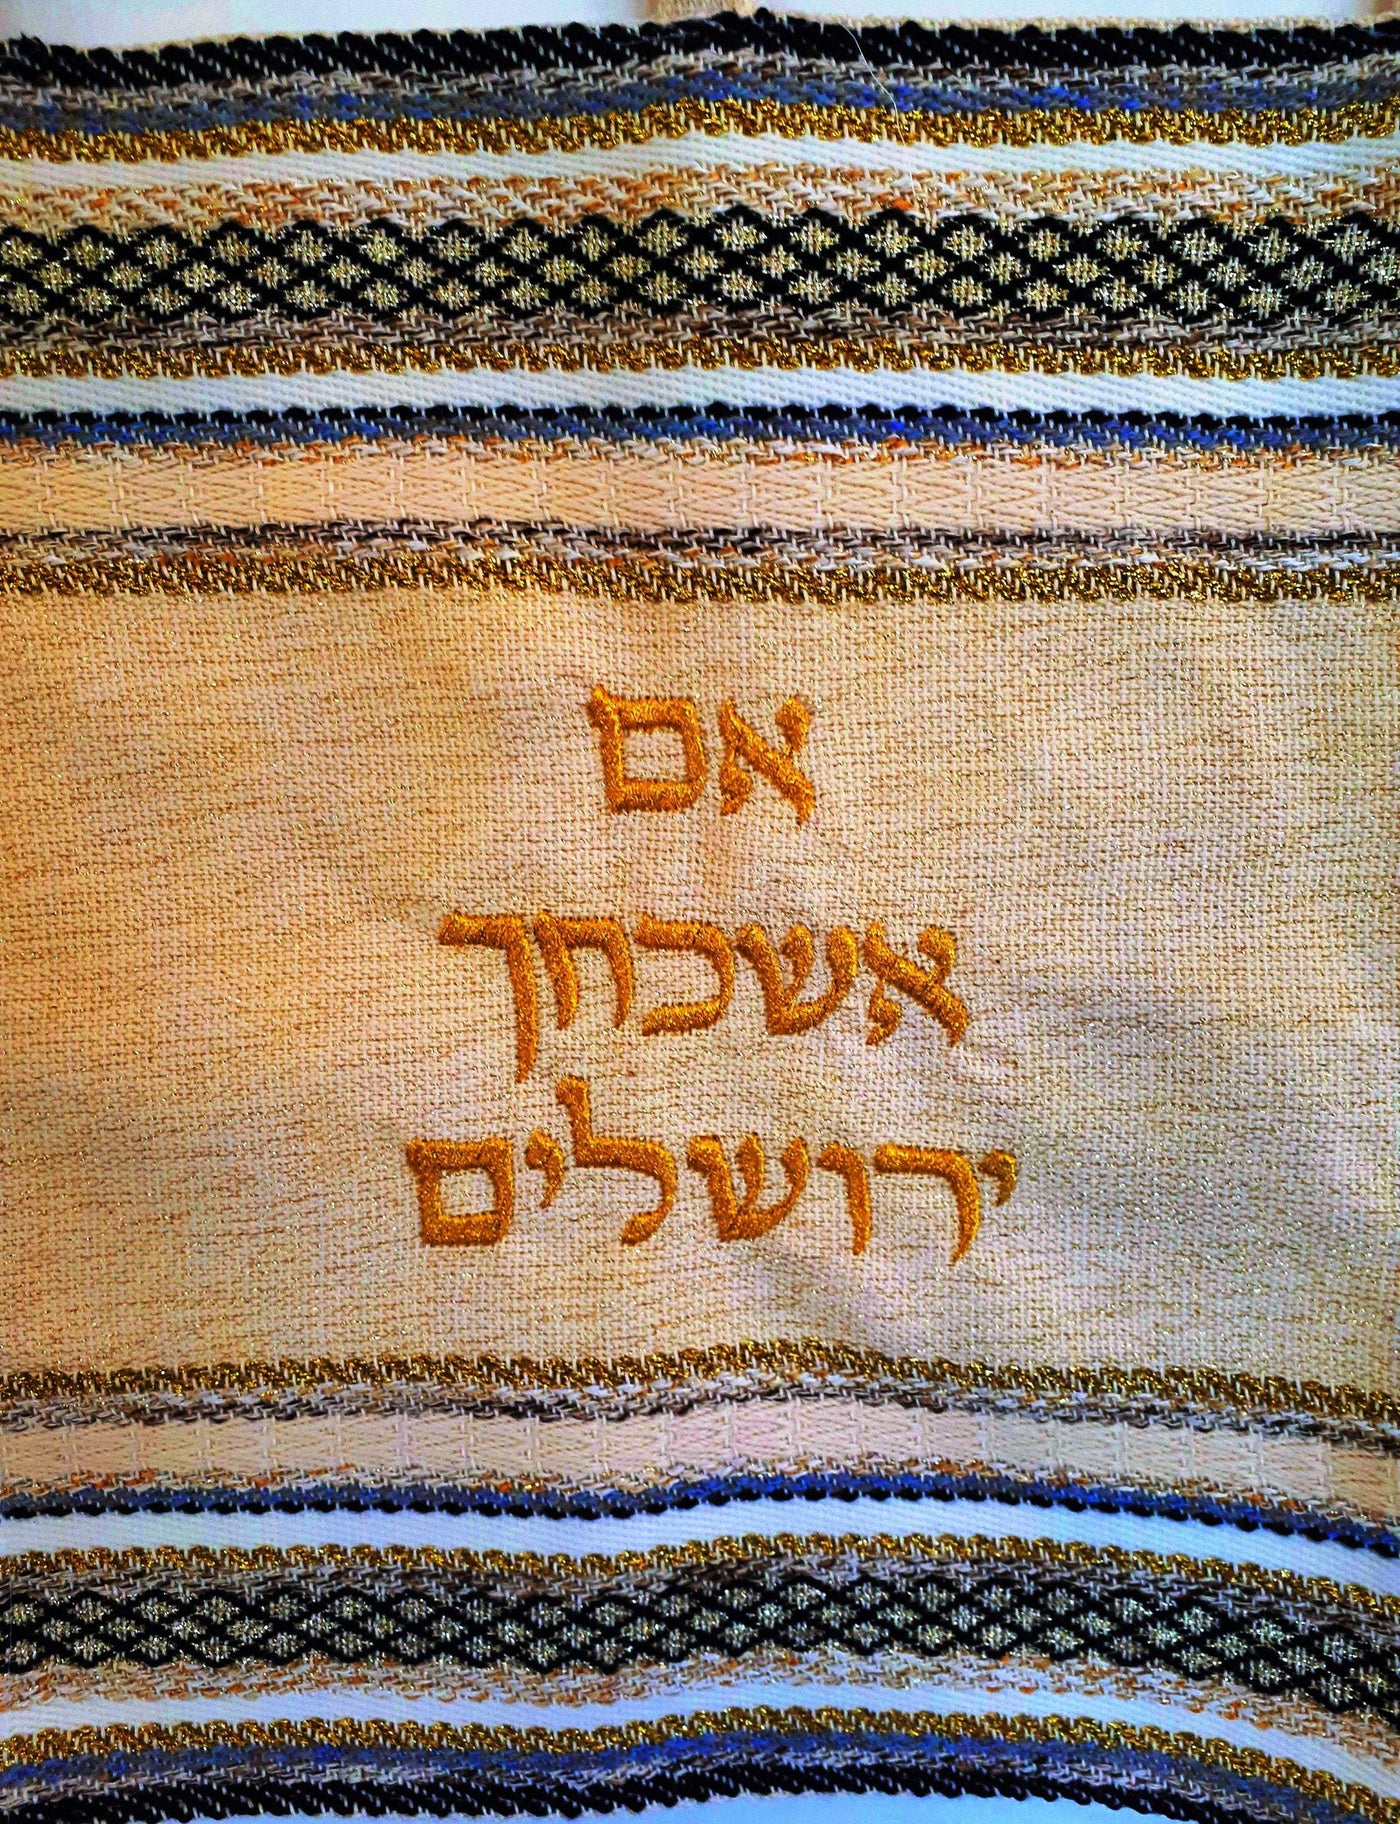 Judaica Gift Home, Woven Wall Hanging, Boho Wall Rug, Wall Art Jewish, Wall Hanging Tapestry, Jewish Home Gift, Wall Art Israeli, Embroidery